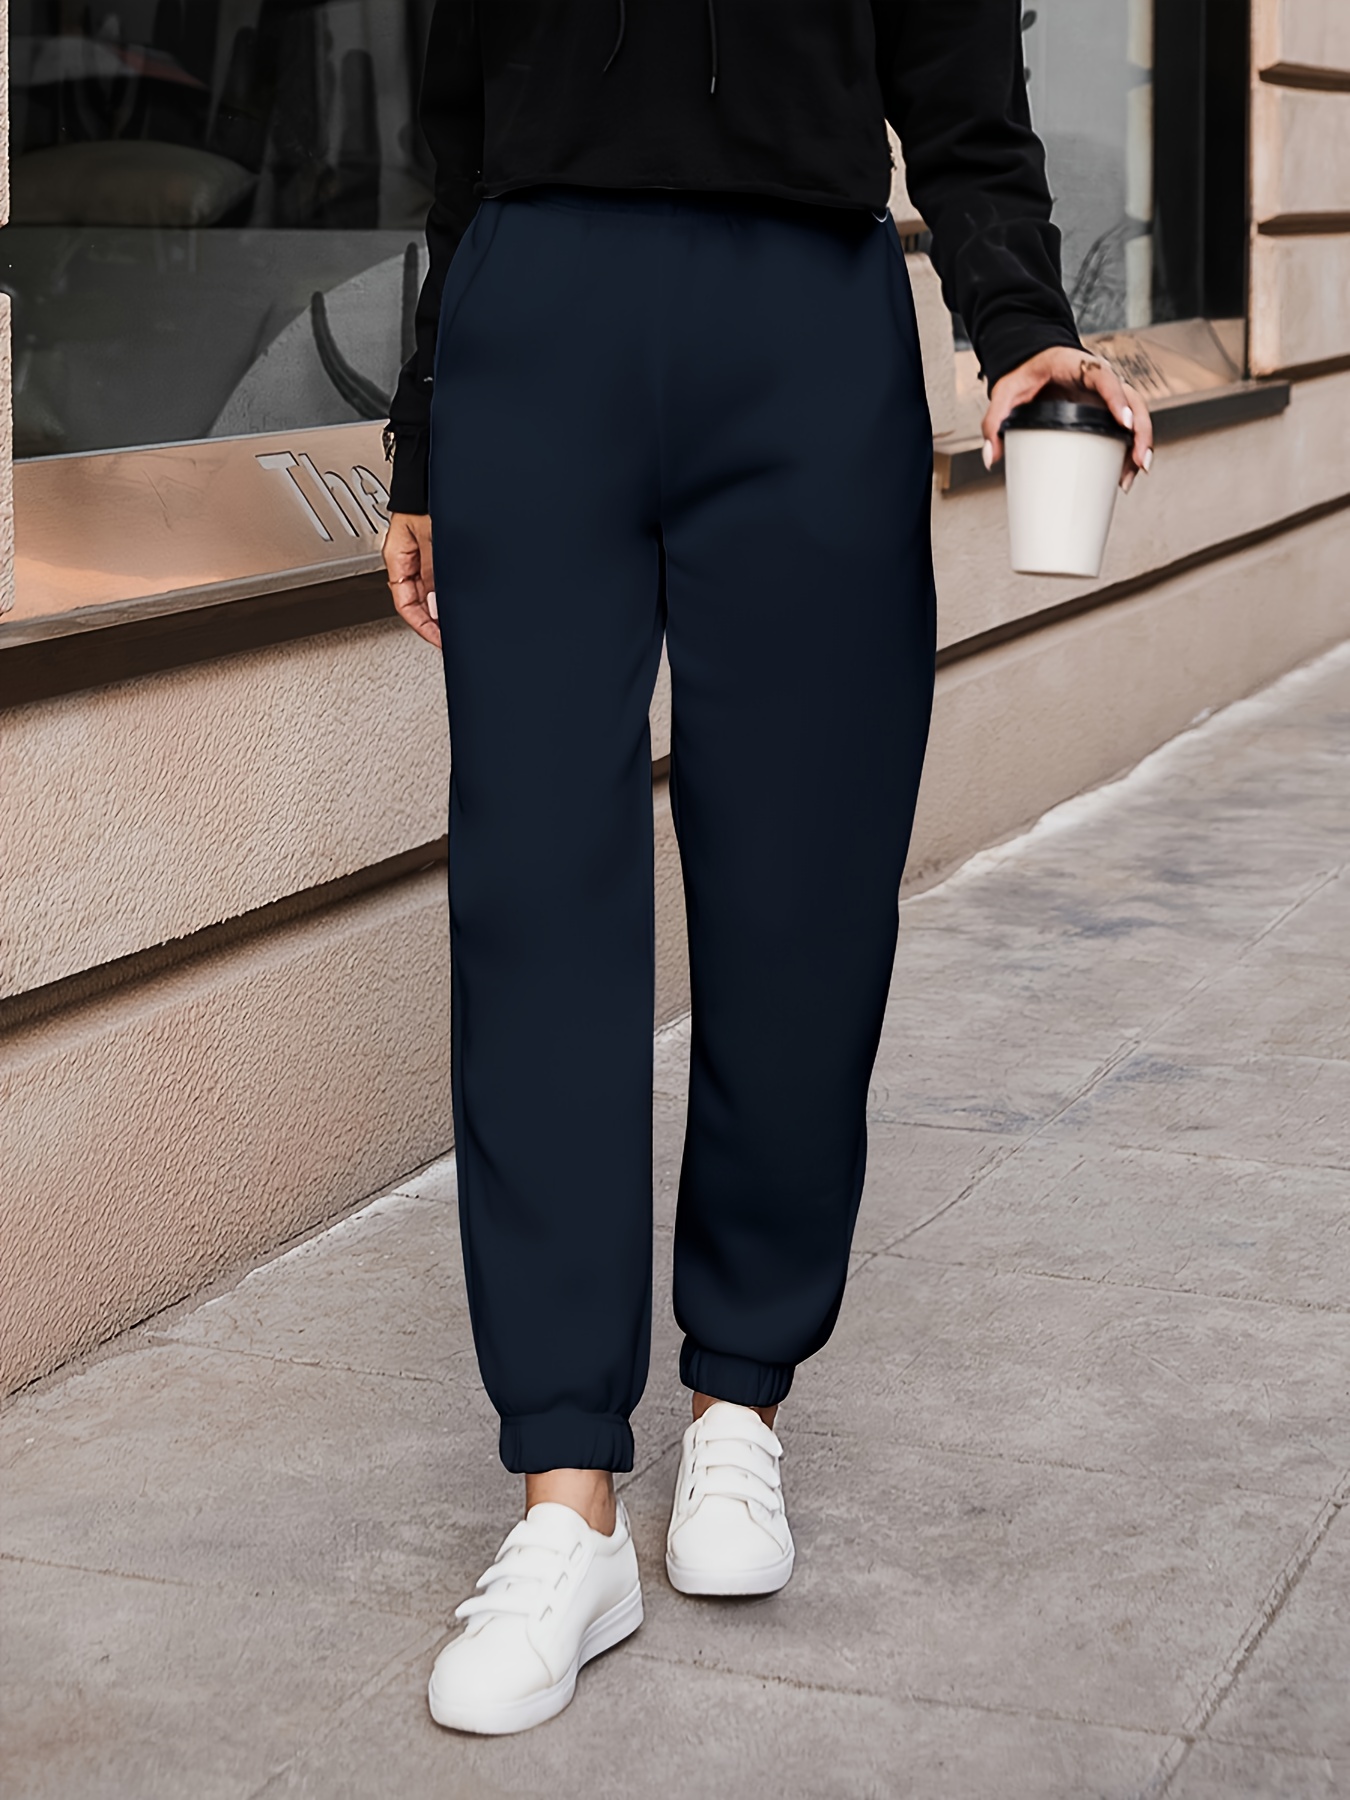 GWNWTT Women's Sweatpants Drawstring Waist Slant Pocket Palazzo Pants  Sweatpants (Color : Black, Size : X-Small)